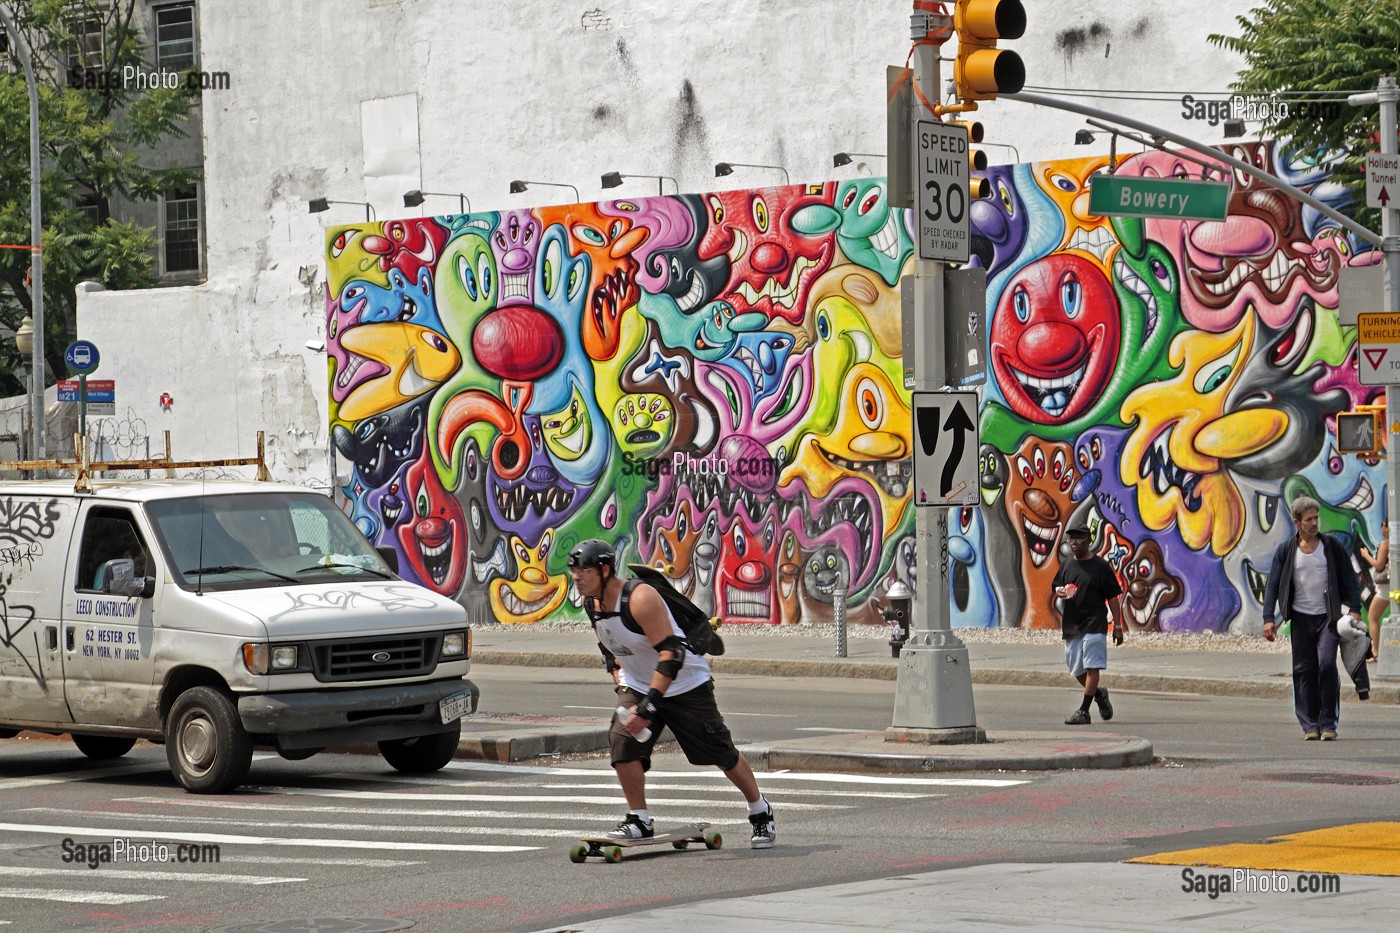 SCENE DE RUE SUR FOND DE GRAFFITIS, MANHATTAN, NEW YORK CITY, ETAT DE NEW YORK, ETATS-UNIS 